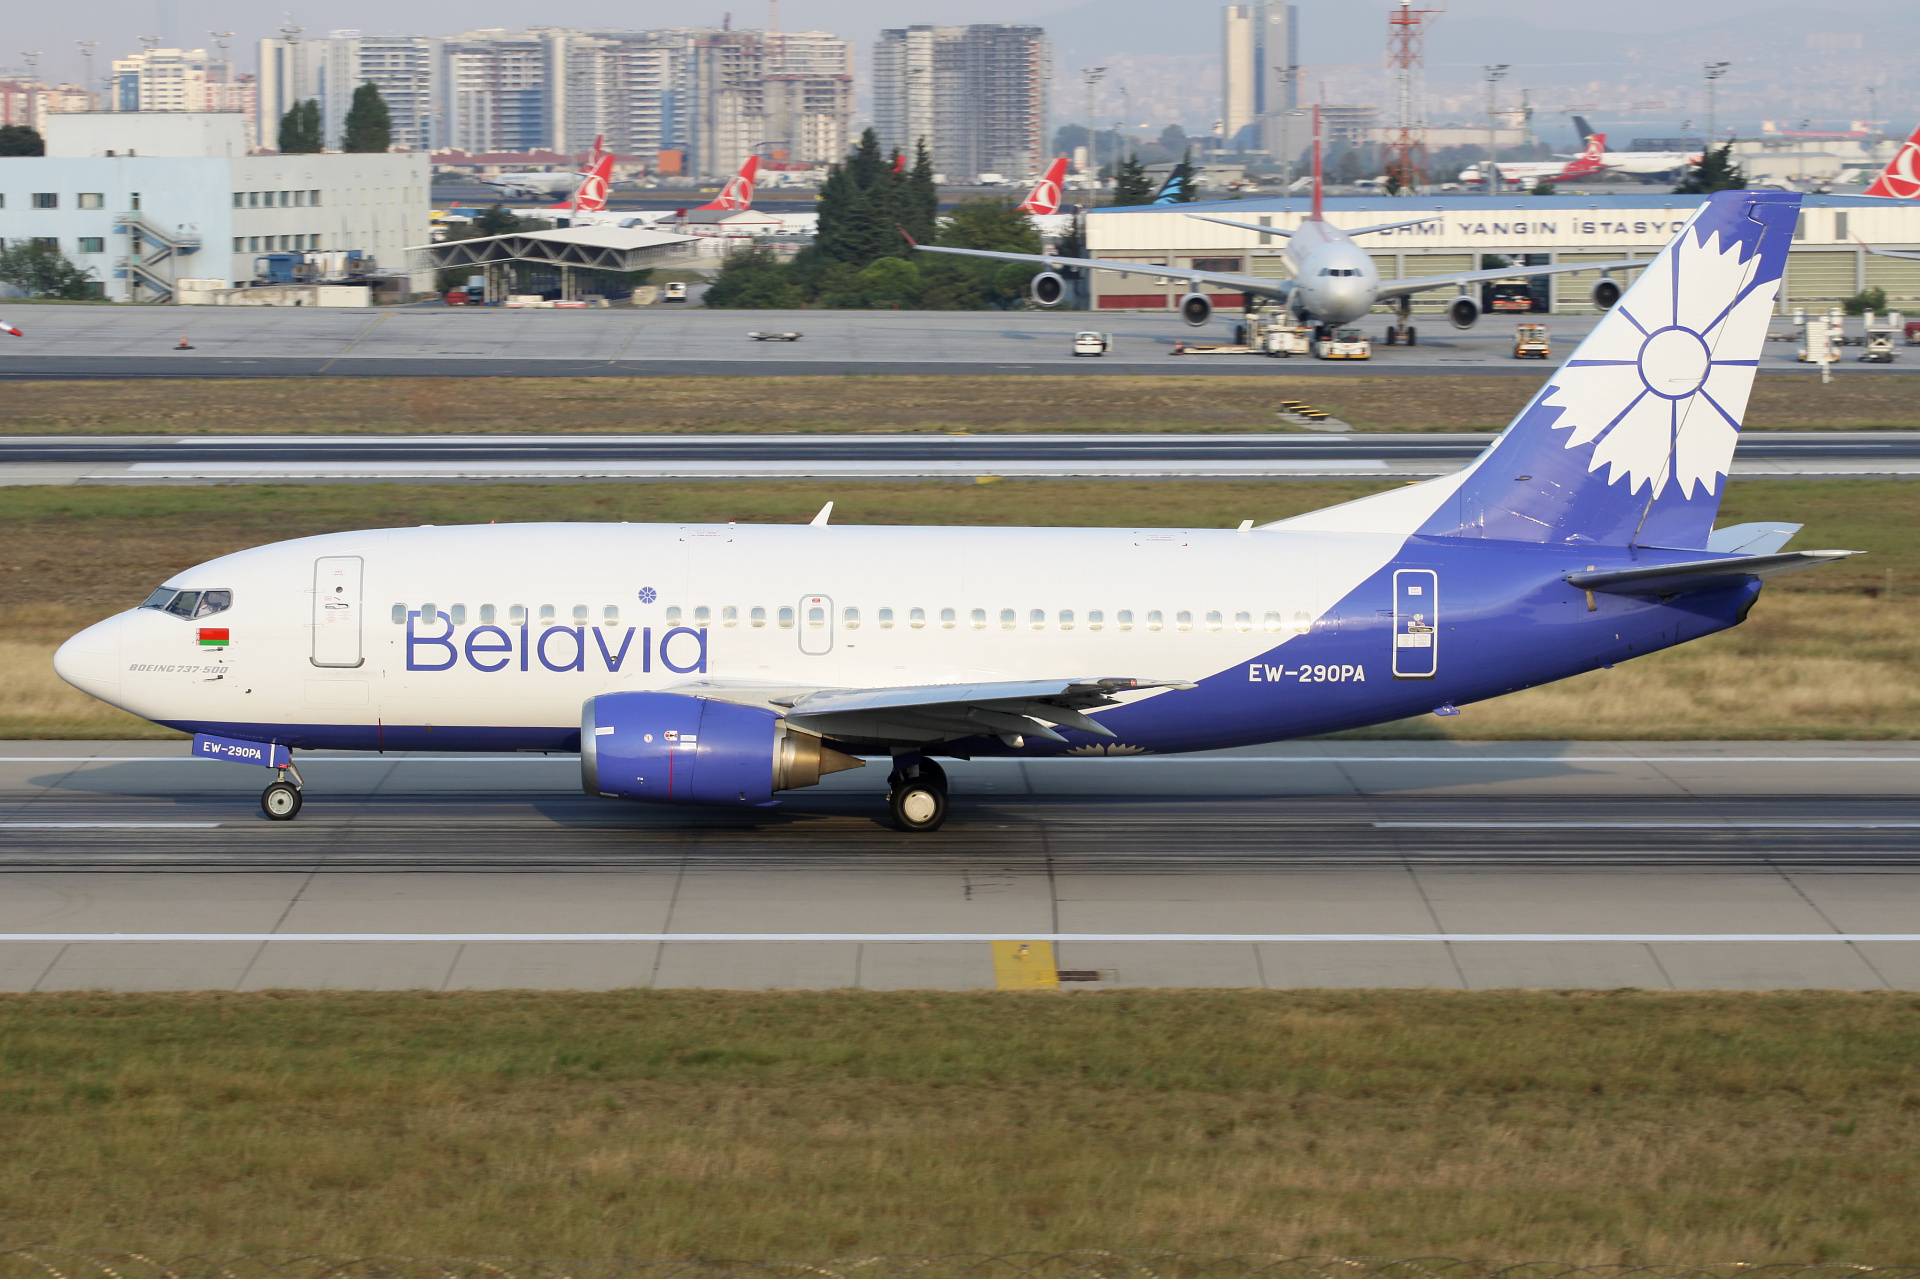 EW-290PA, Belavia (Aircraft » Istanbul Atatürk Airport » Boeing 737-500)